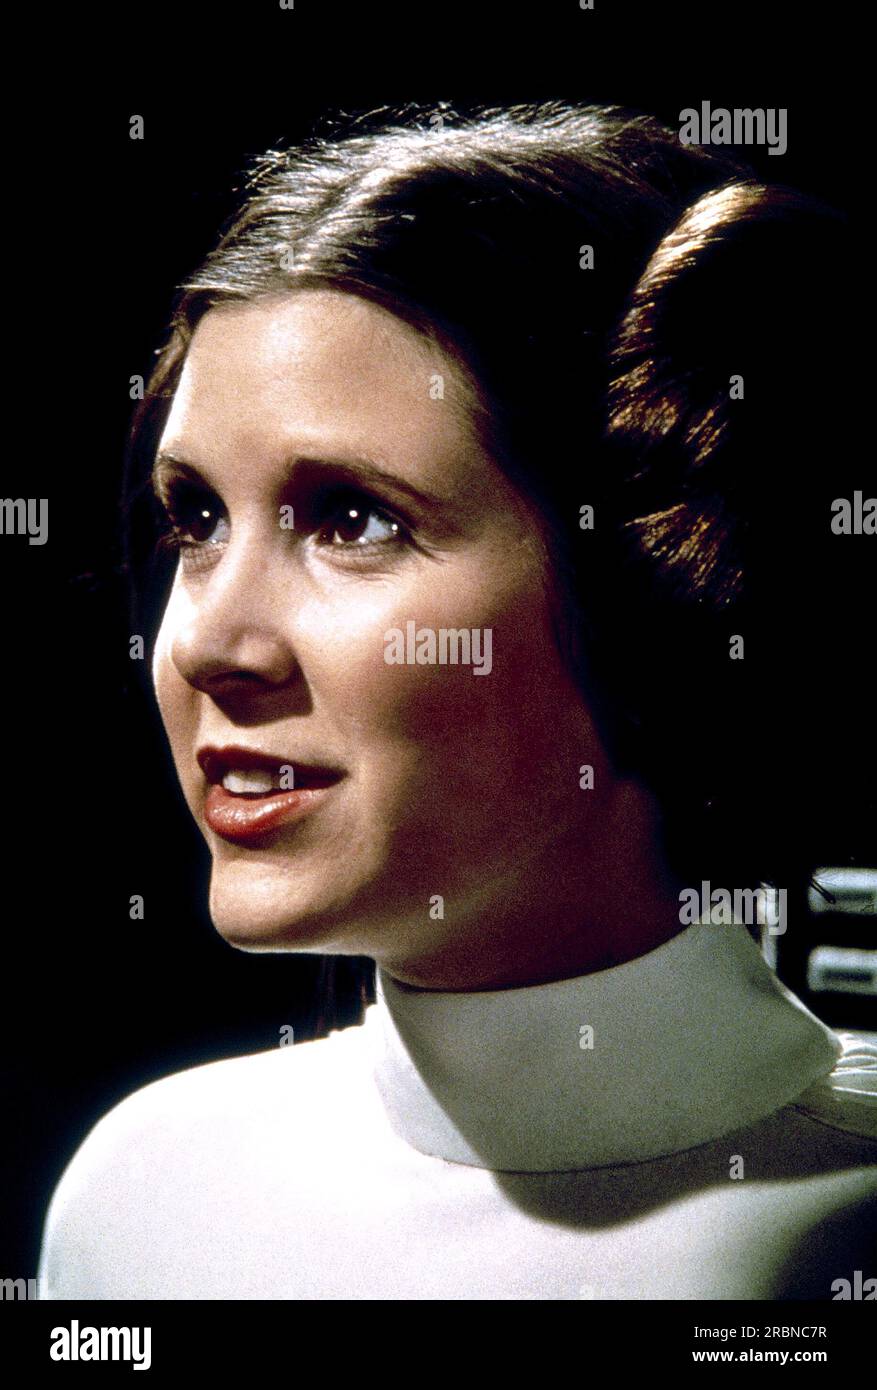 Star Wars Star Wars episodio IV - Una nuova speranza Carrie Fisher Principessa Leia Foto Stock